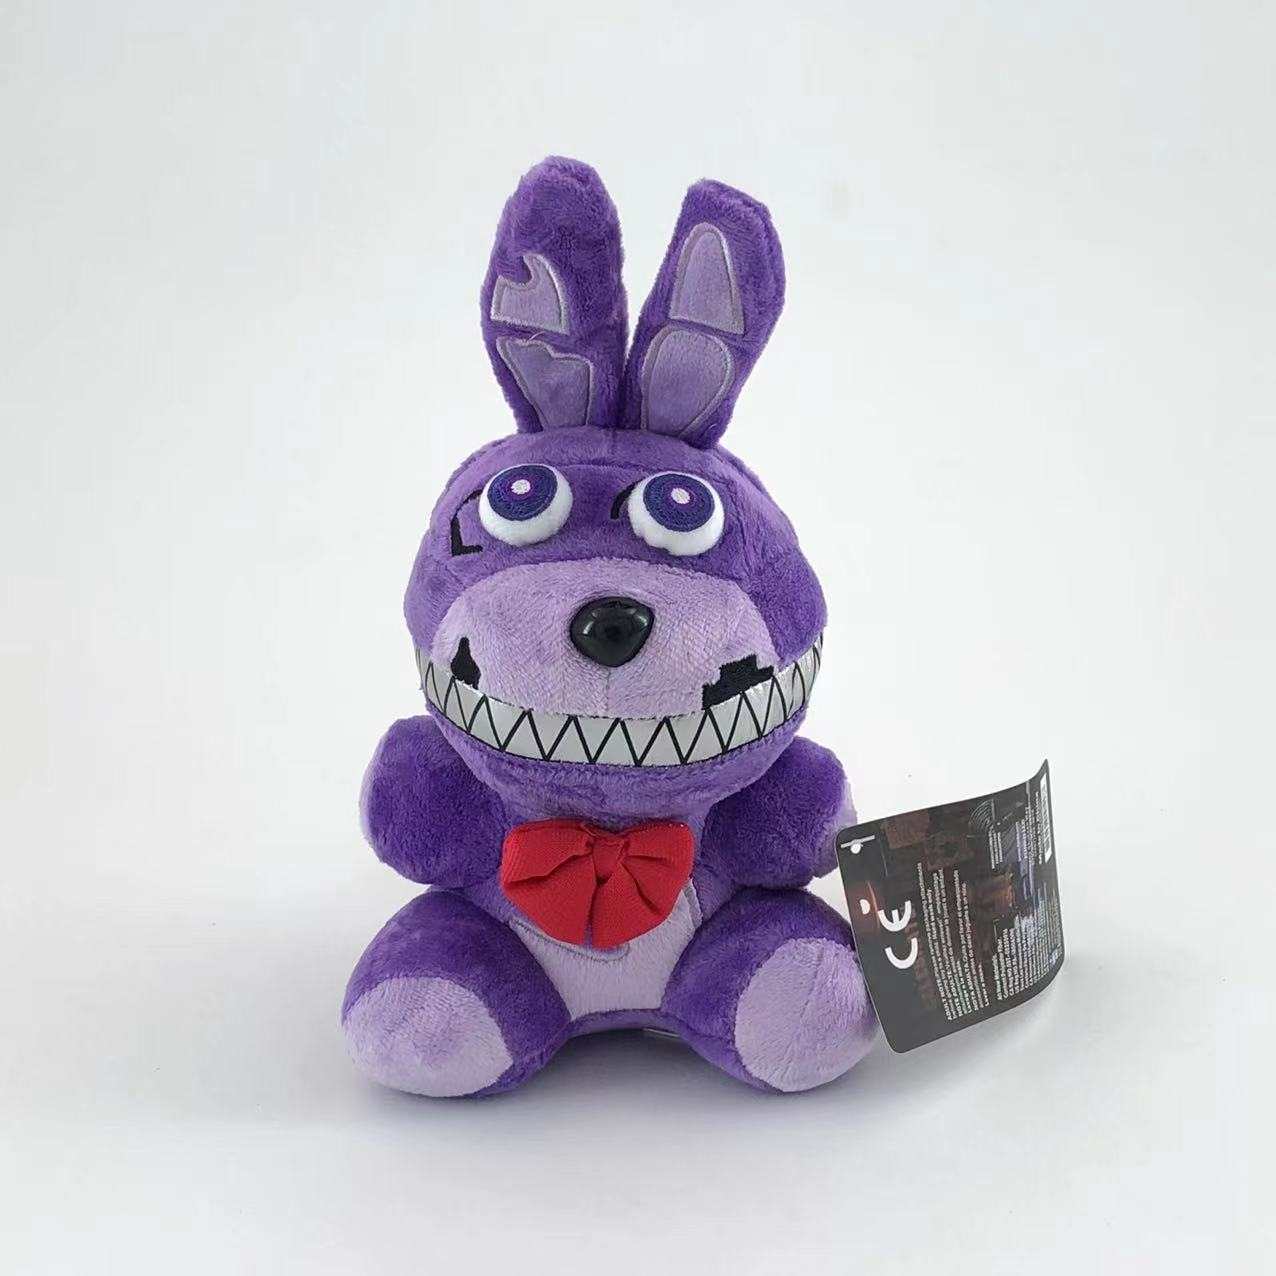 Cute Fnaf Purple Plush Nightmare Bonnie Plush Toys Five Nights At